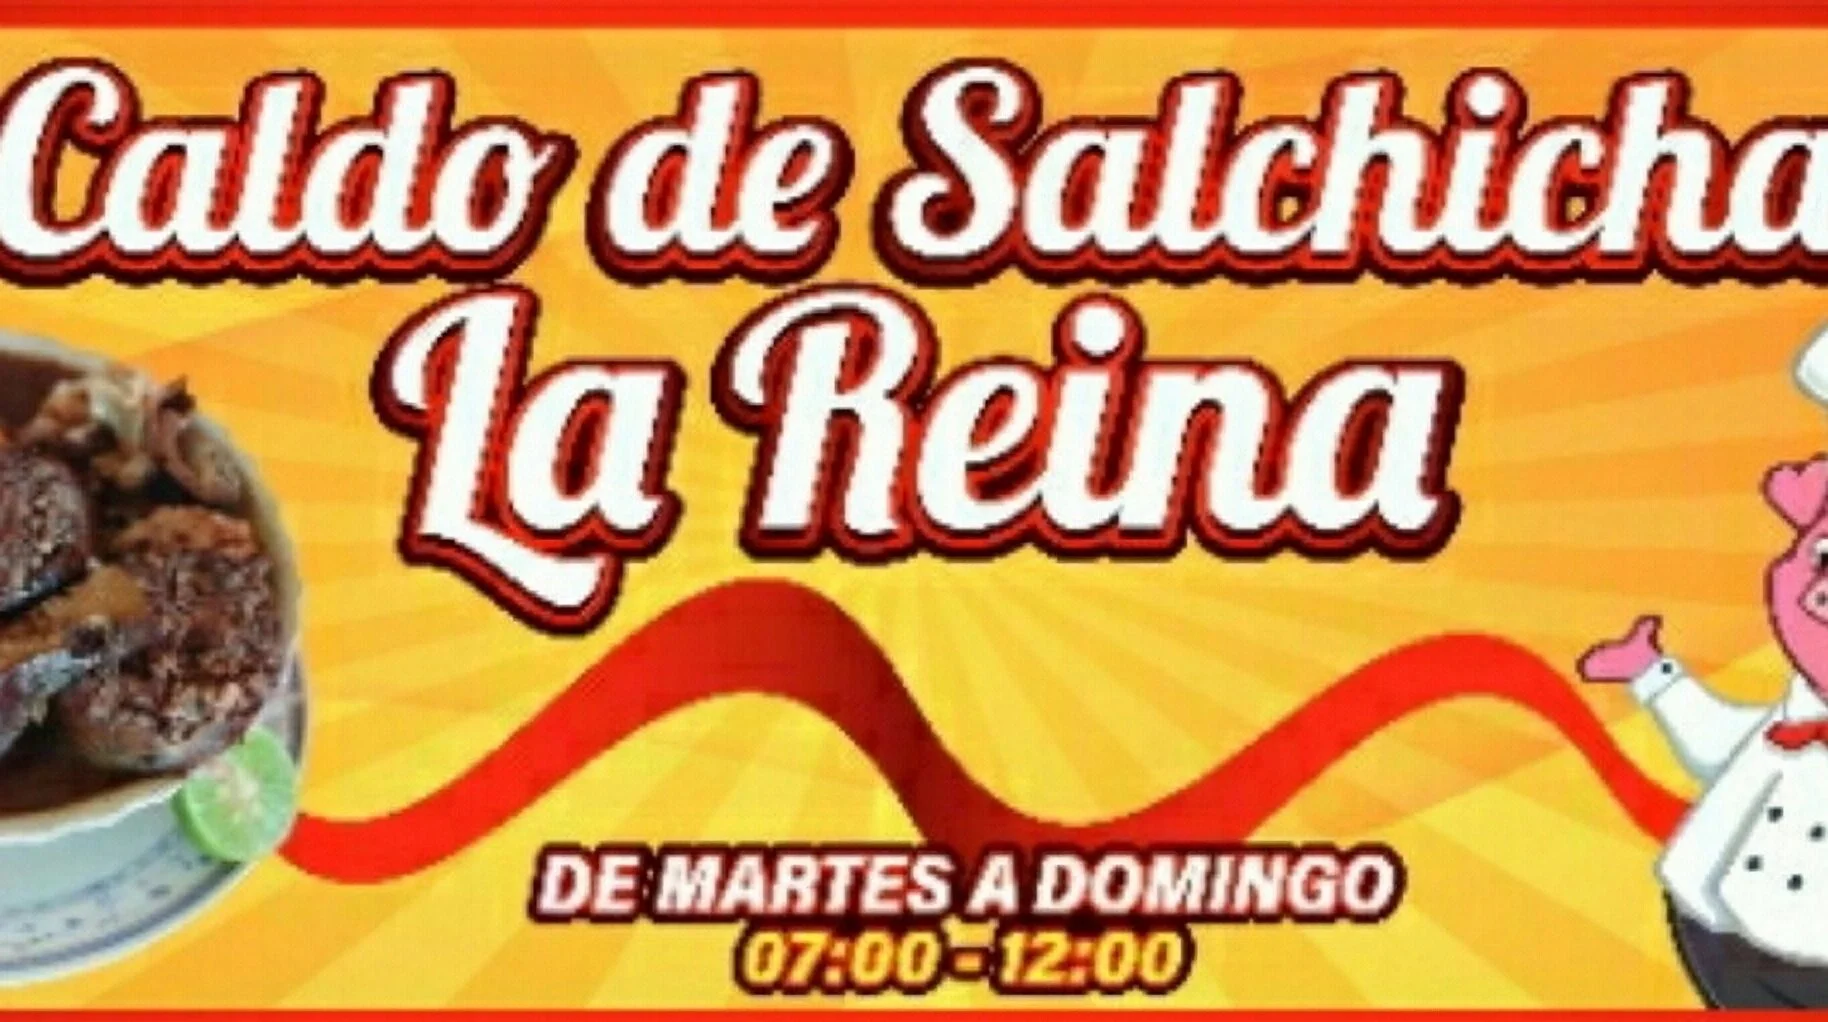 Restaurantes-caldo-de-salchicha-la-reina-19764